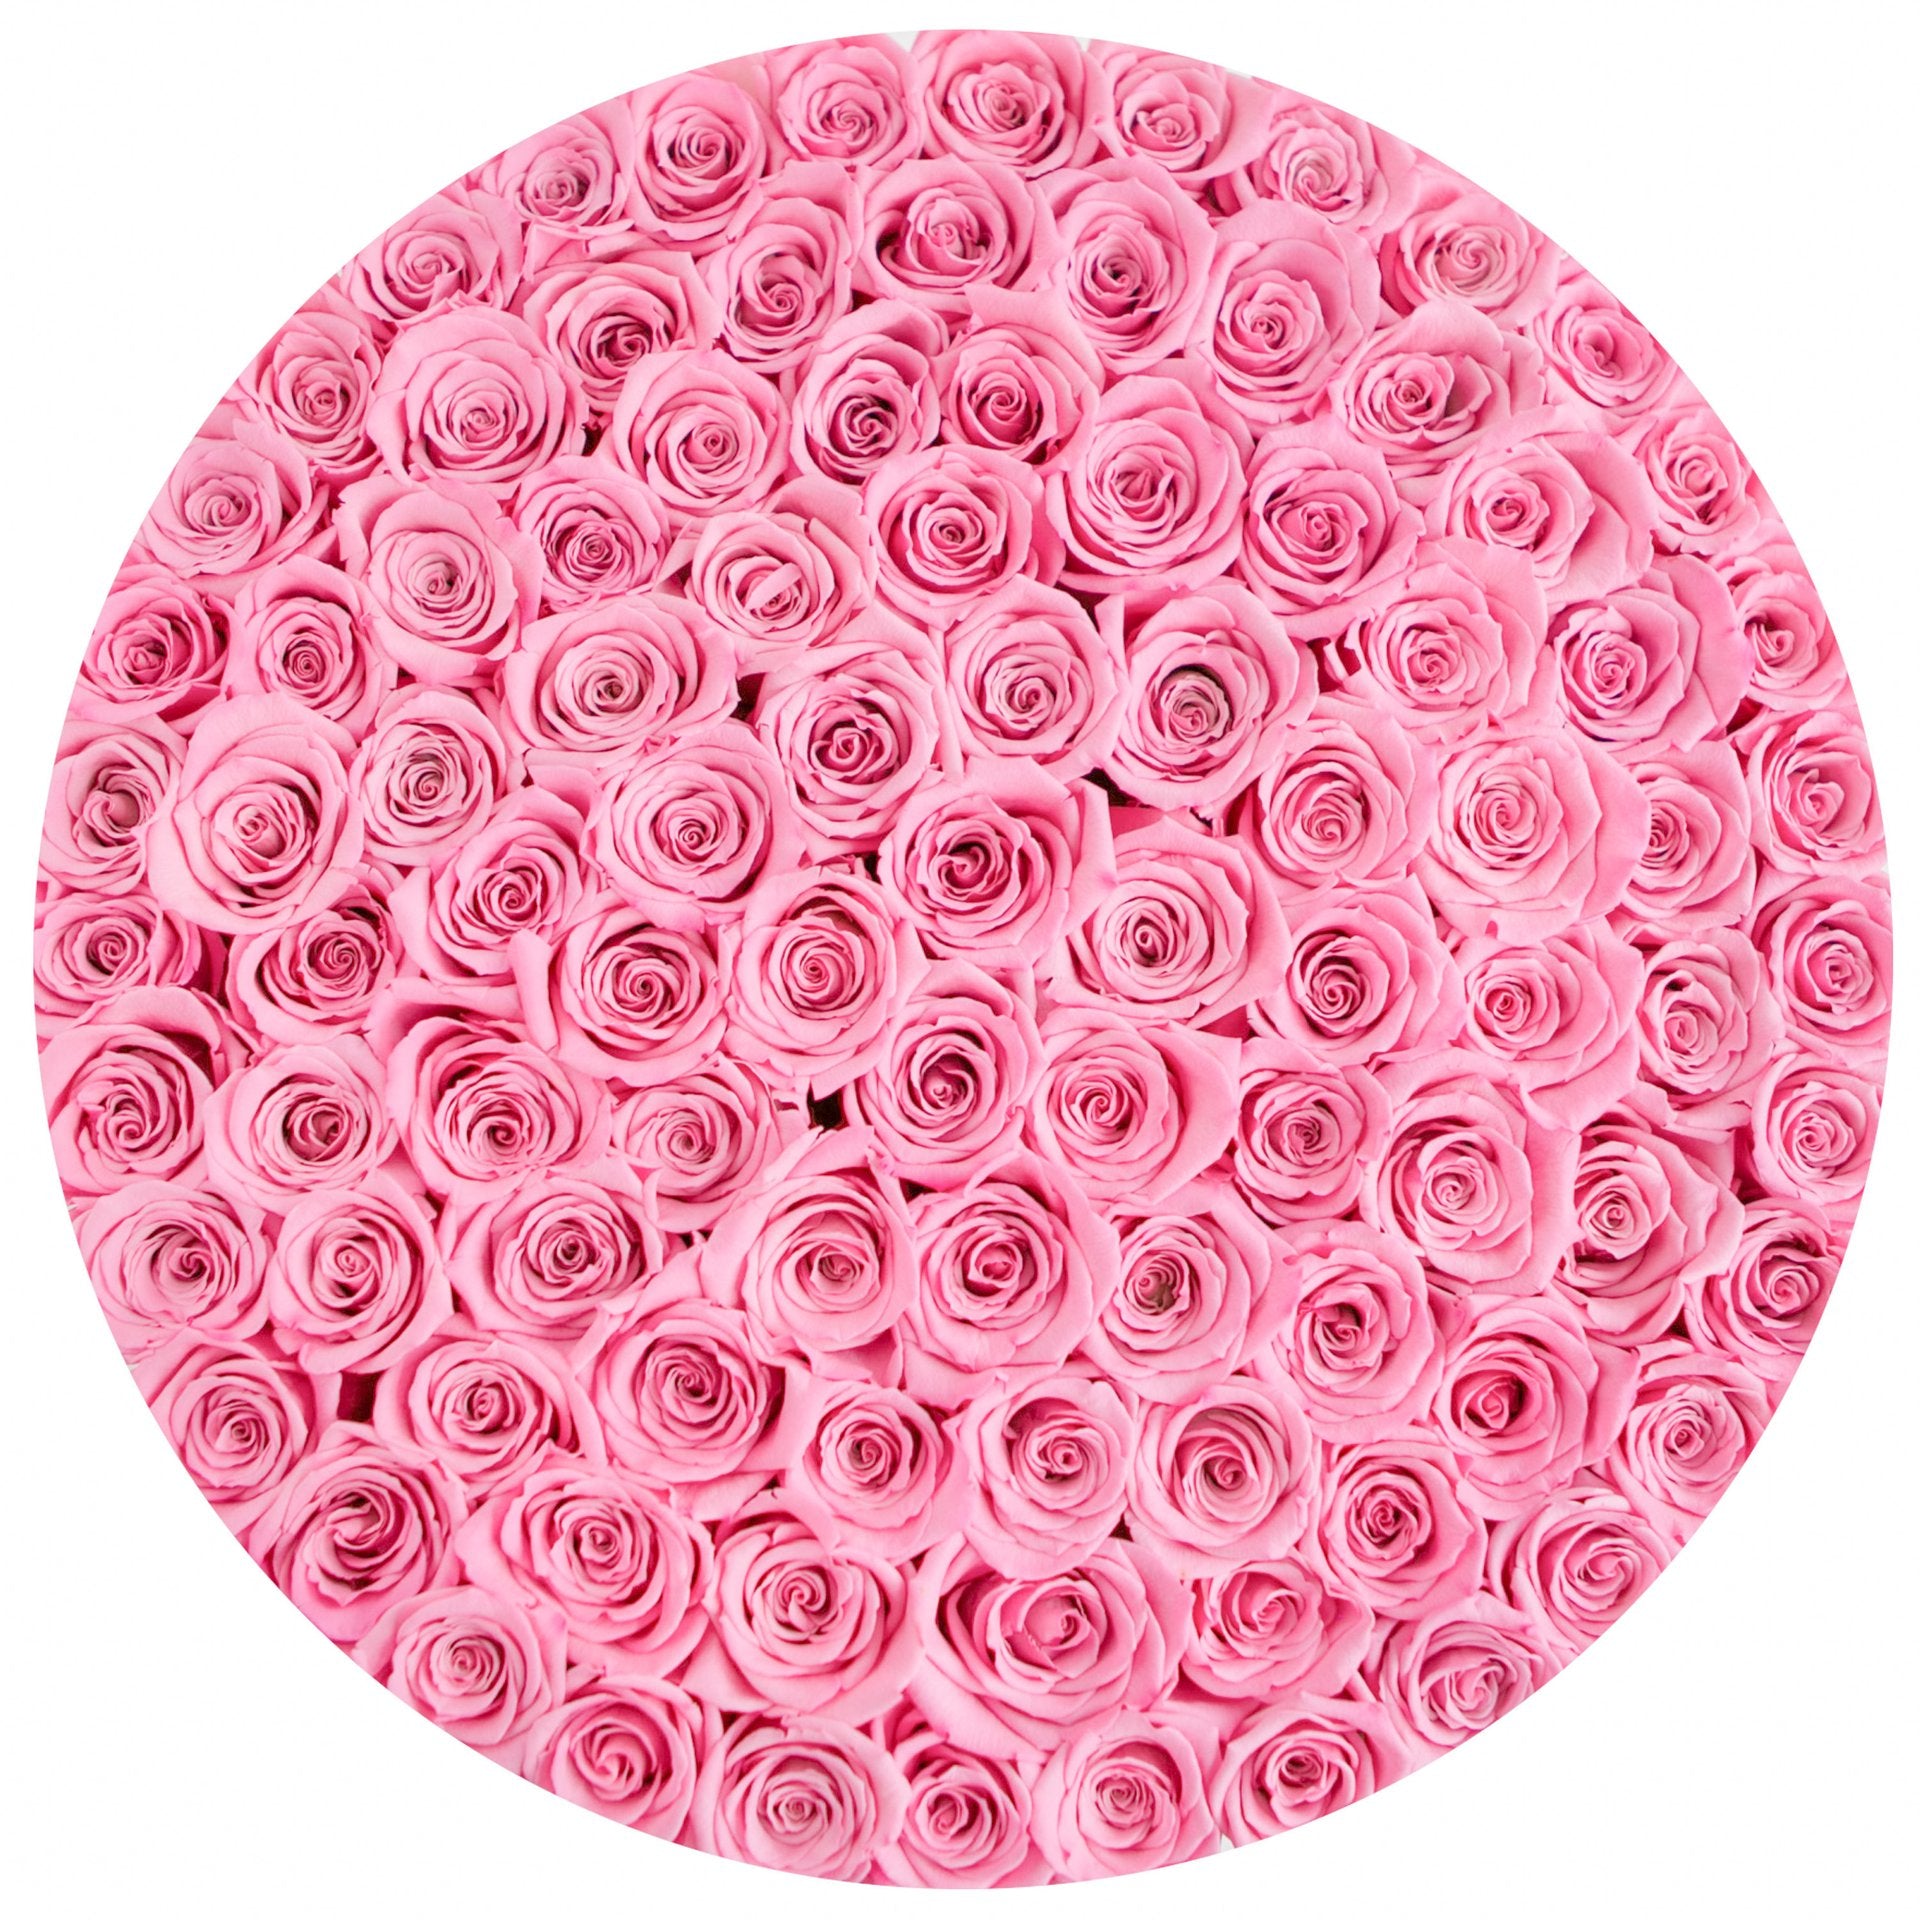 101 trandafiri naturali roz - The luxury edition